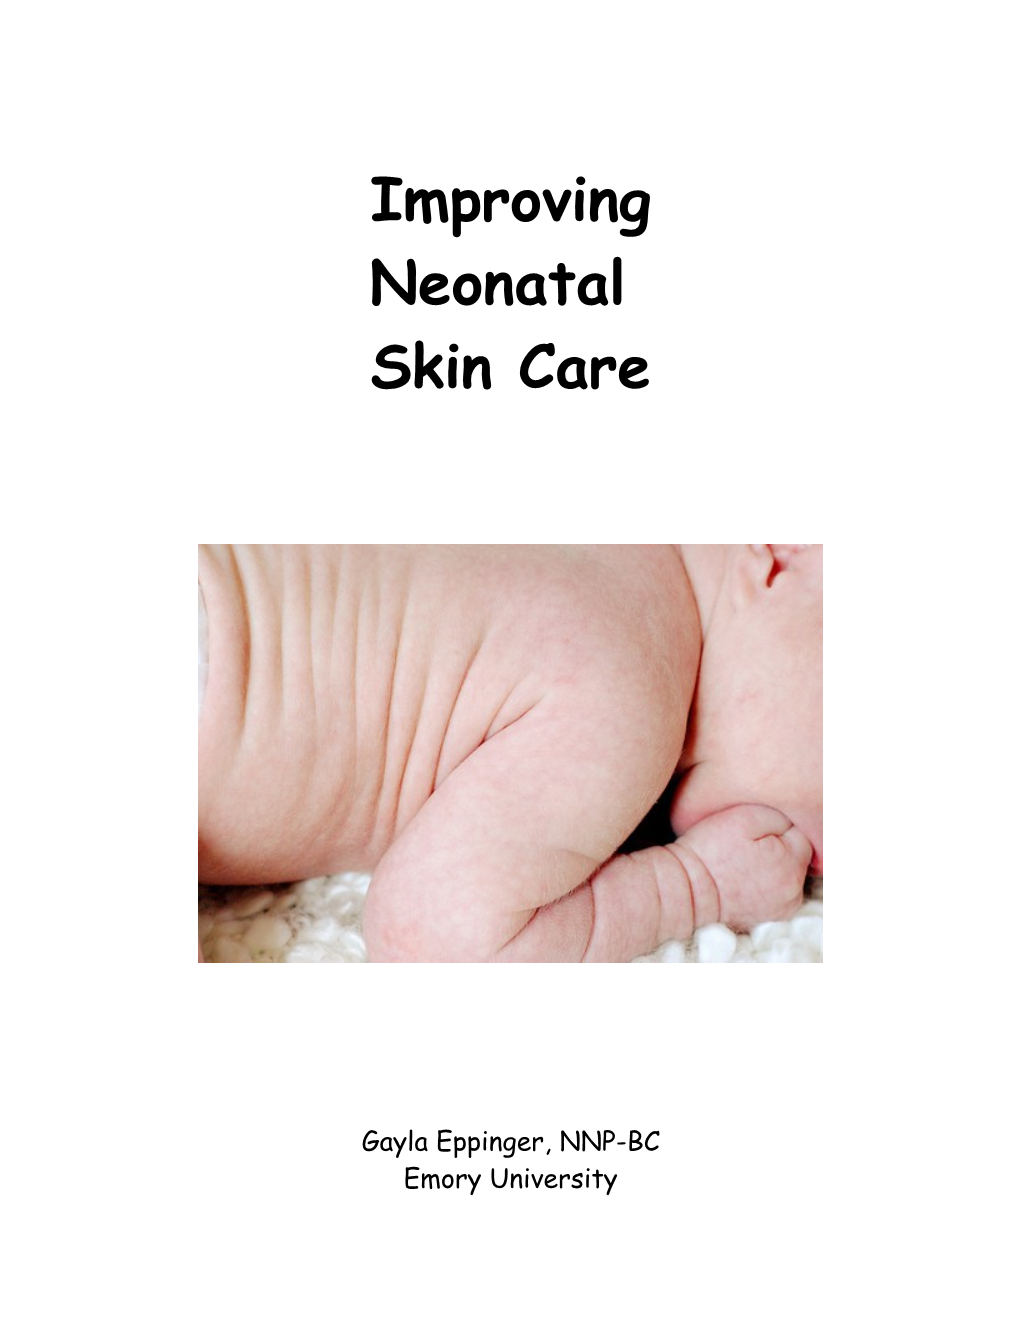 Improving Neonatal Skin Care